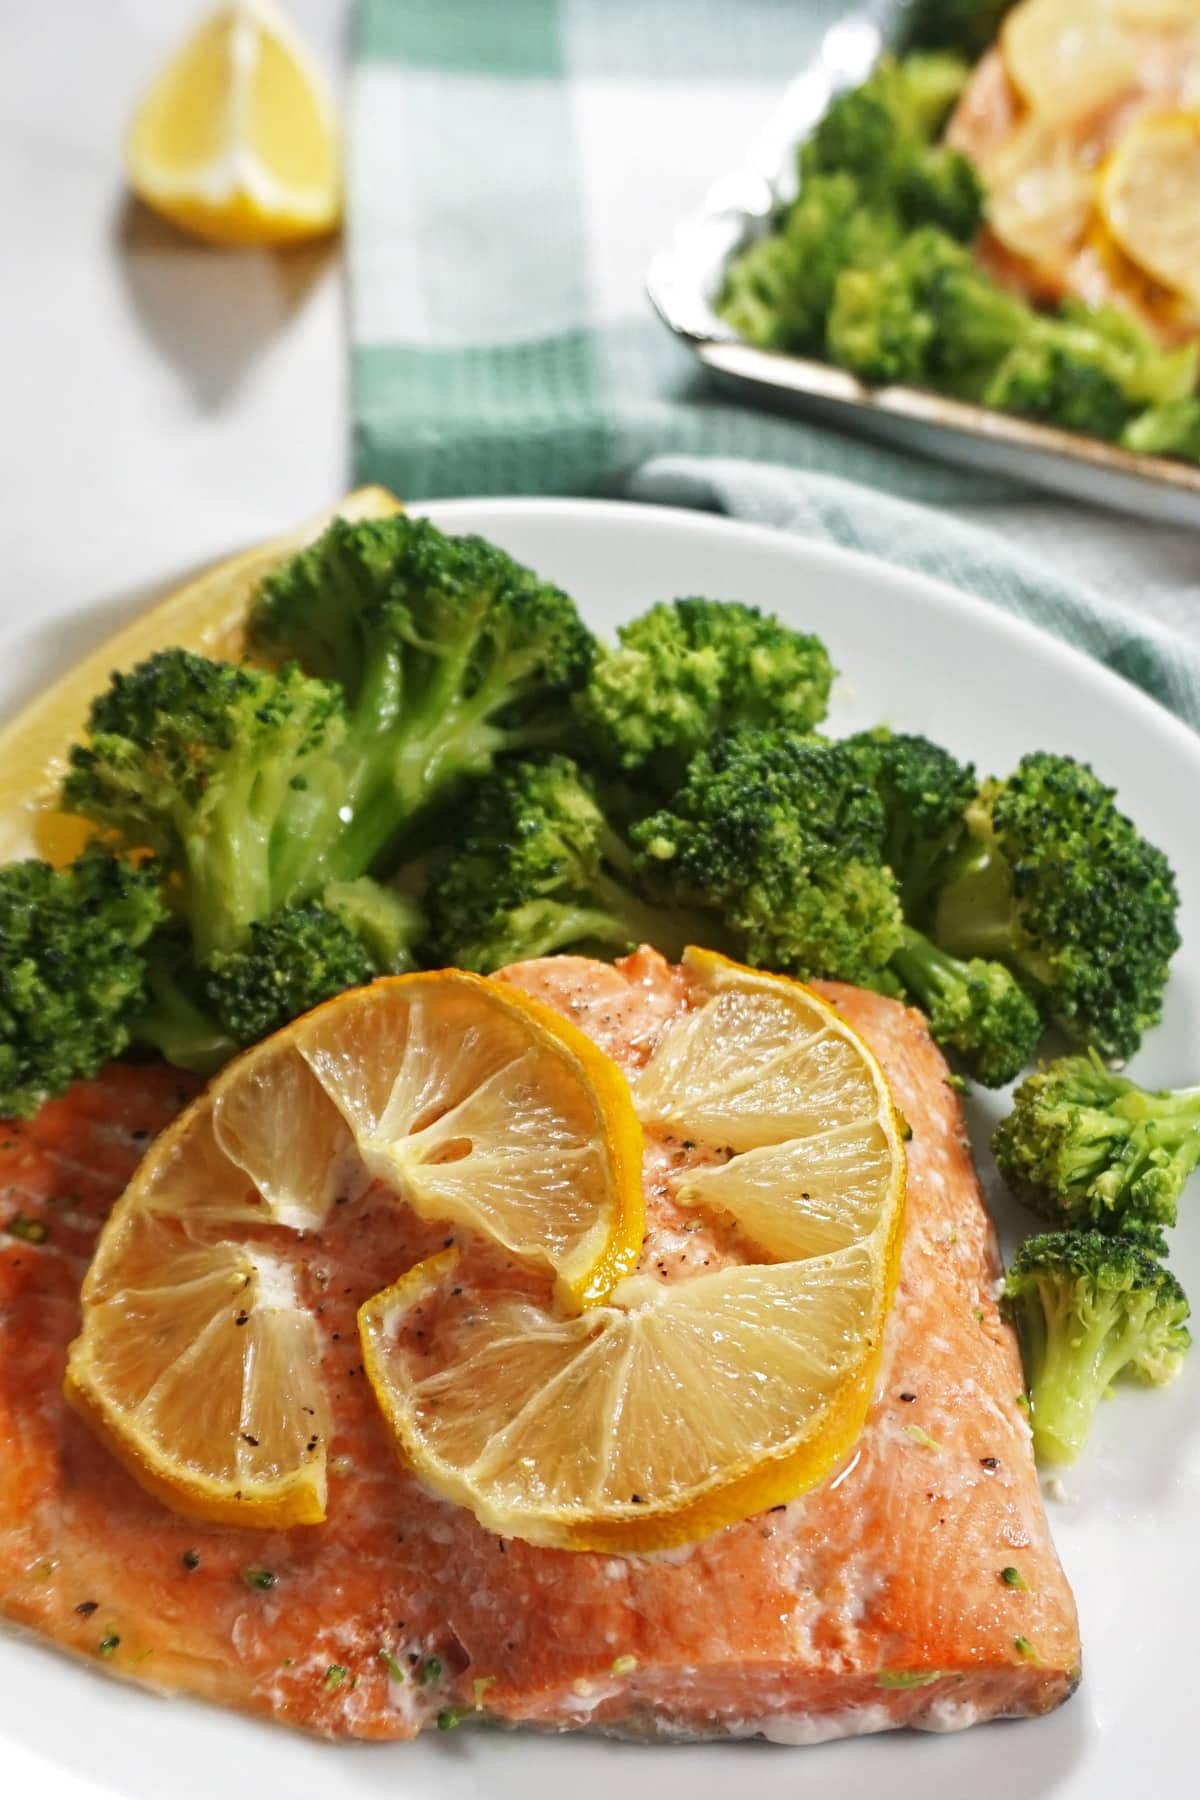 Salmon and broccoli with lemon on a plate